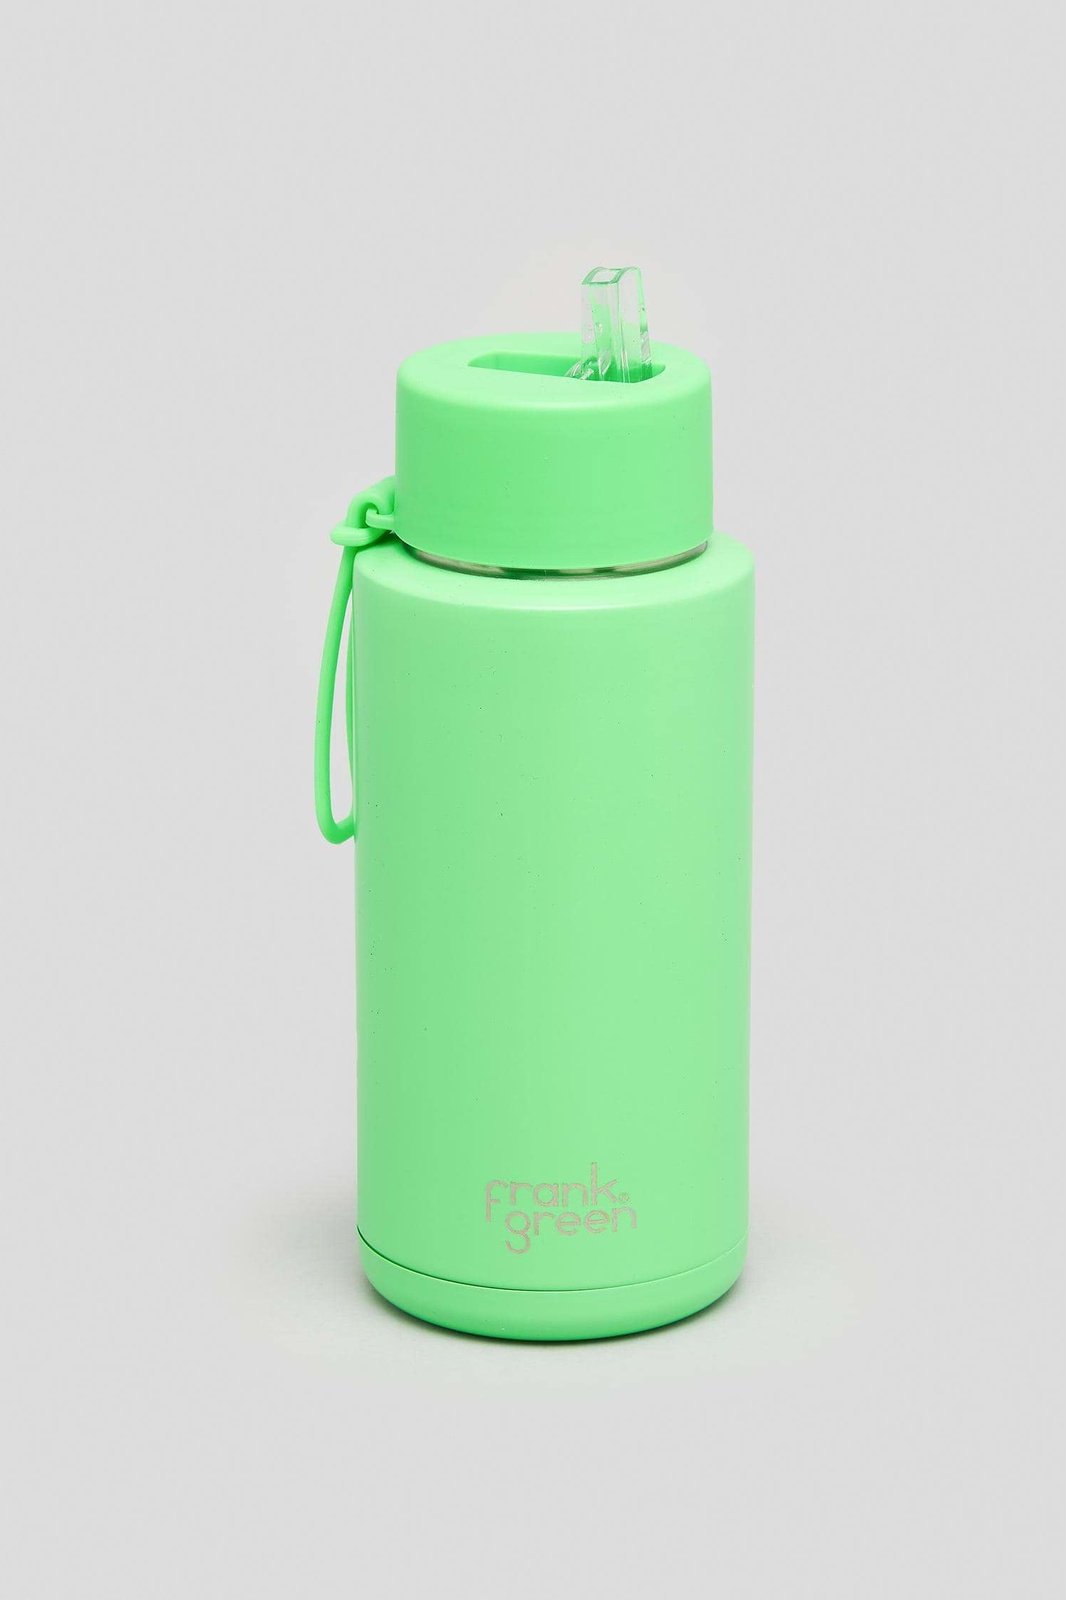 Frank green neon ceramic reusable bottle - 34oz / 1,000ml neon green